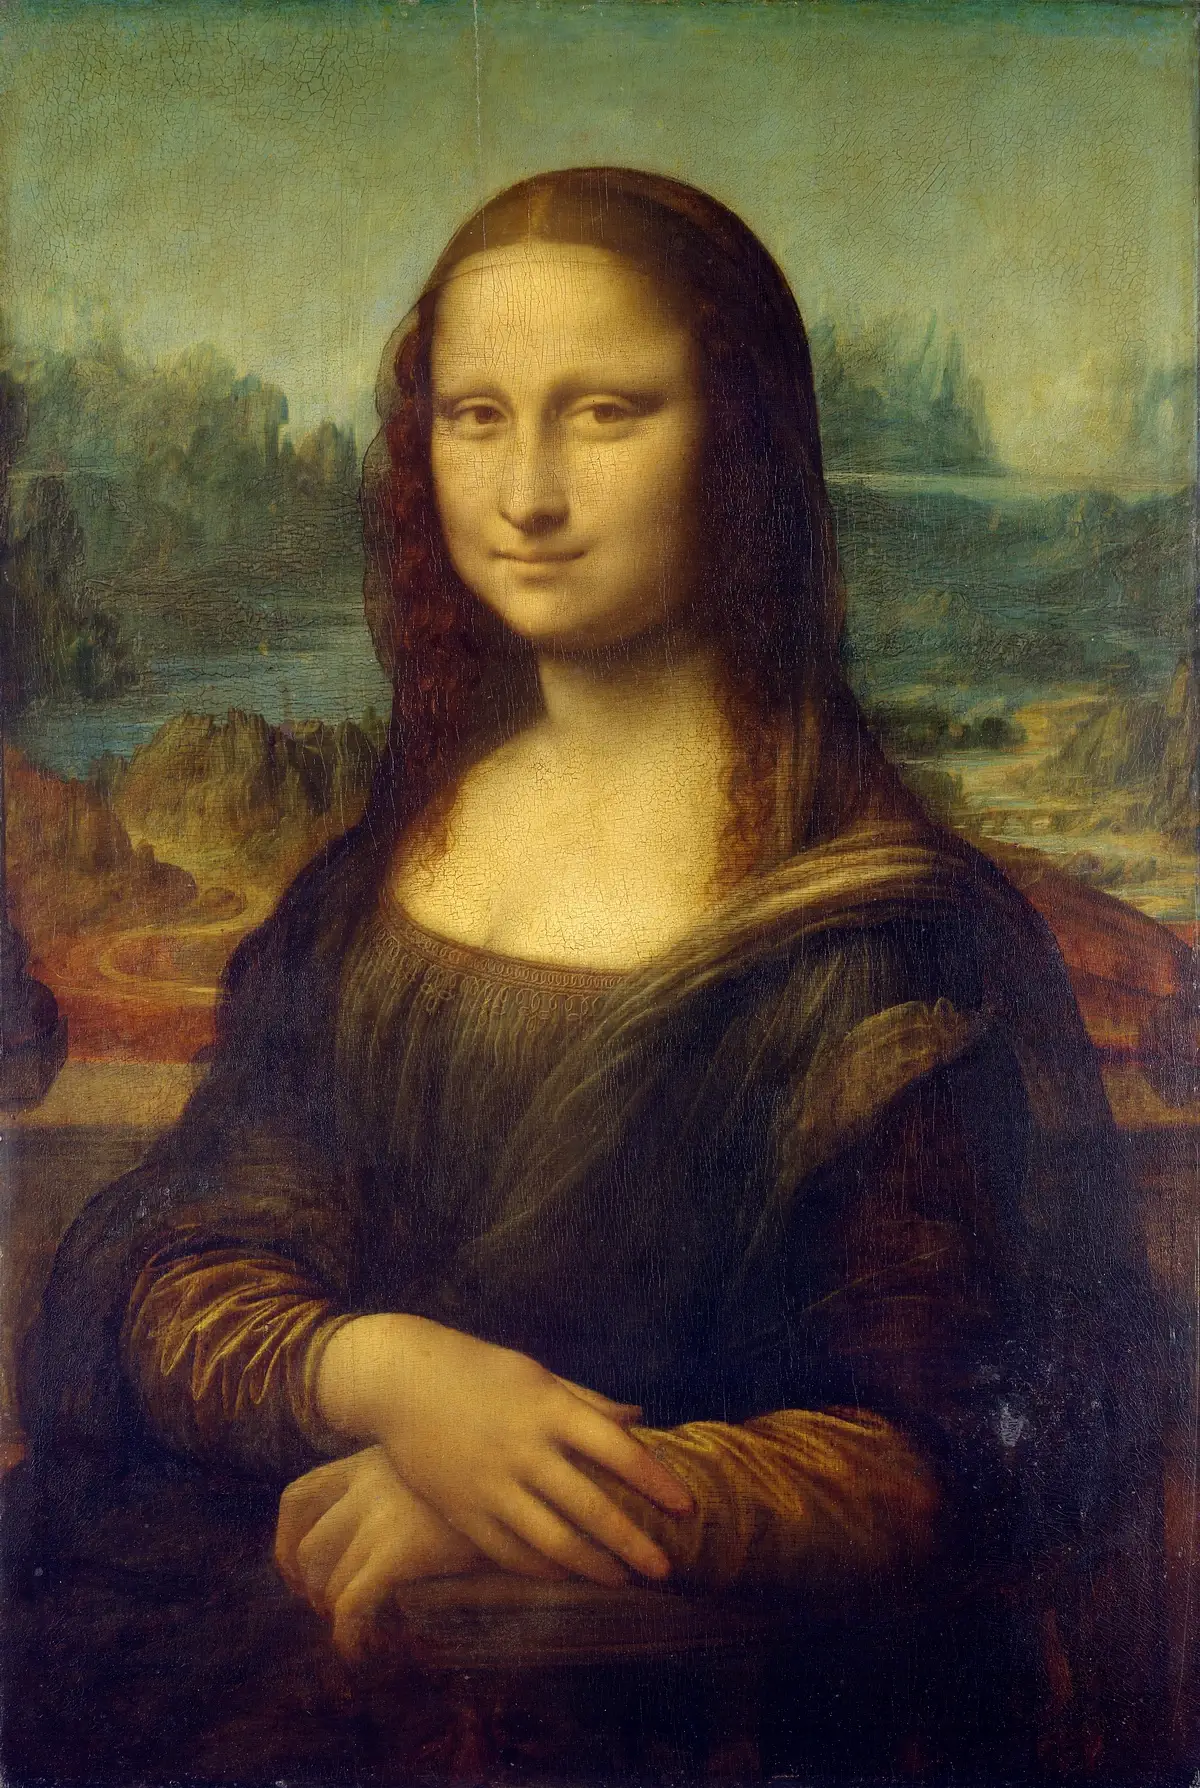 Leonardo da Vinci, "Mona Lisa", 1503